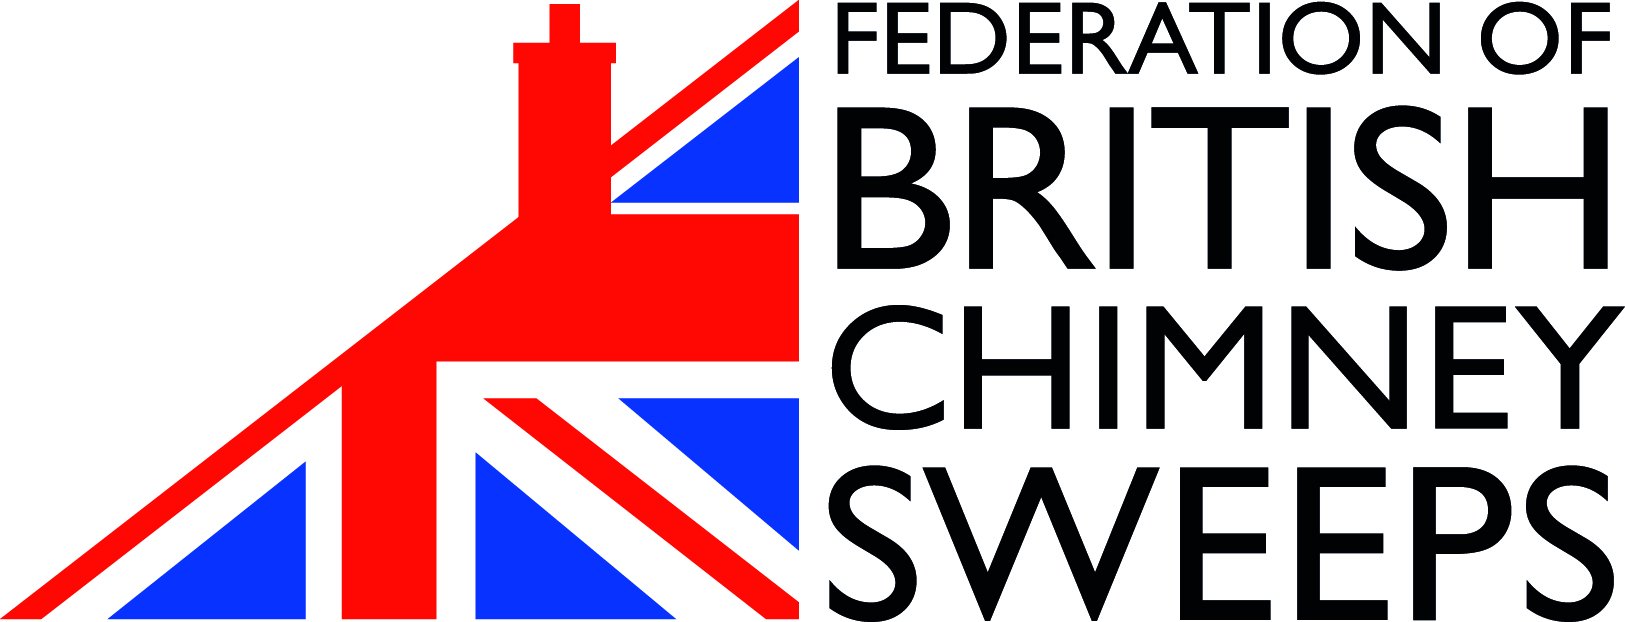 Federation of British Chimney Sweeps